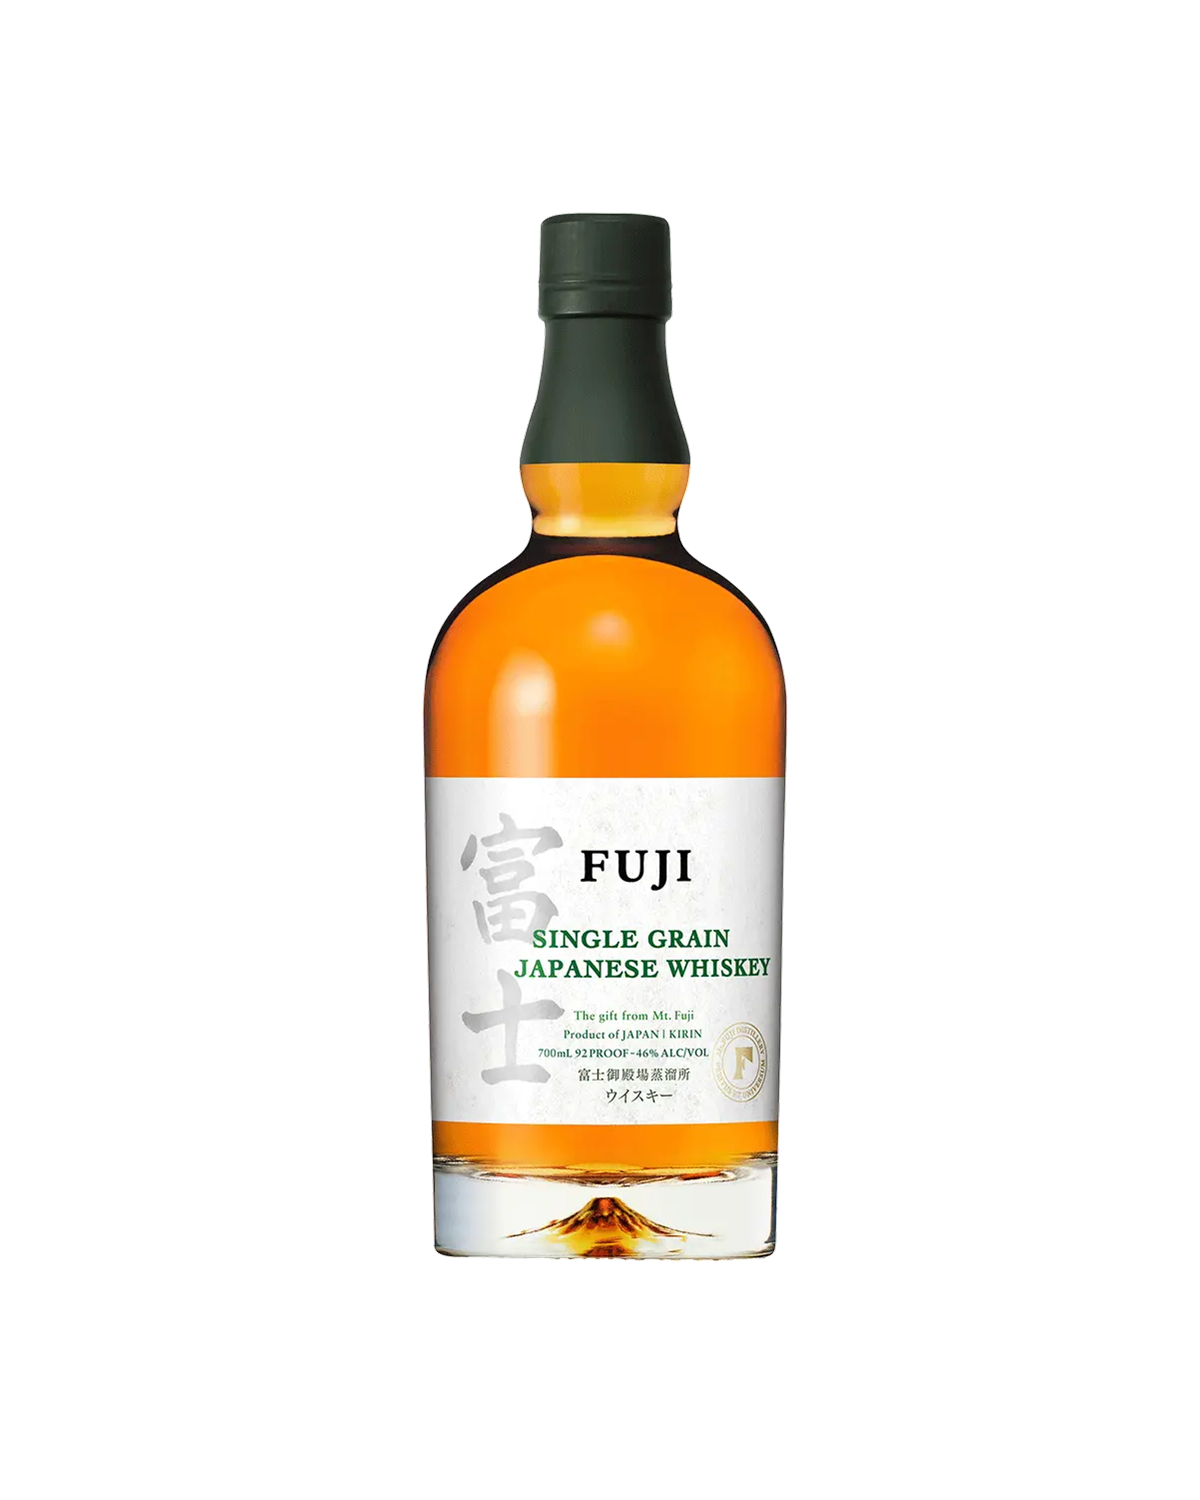 Fuji Single Grain Japanese Whisky